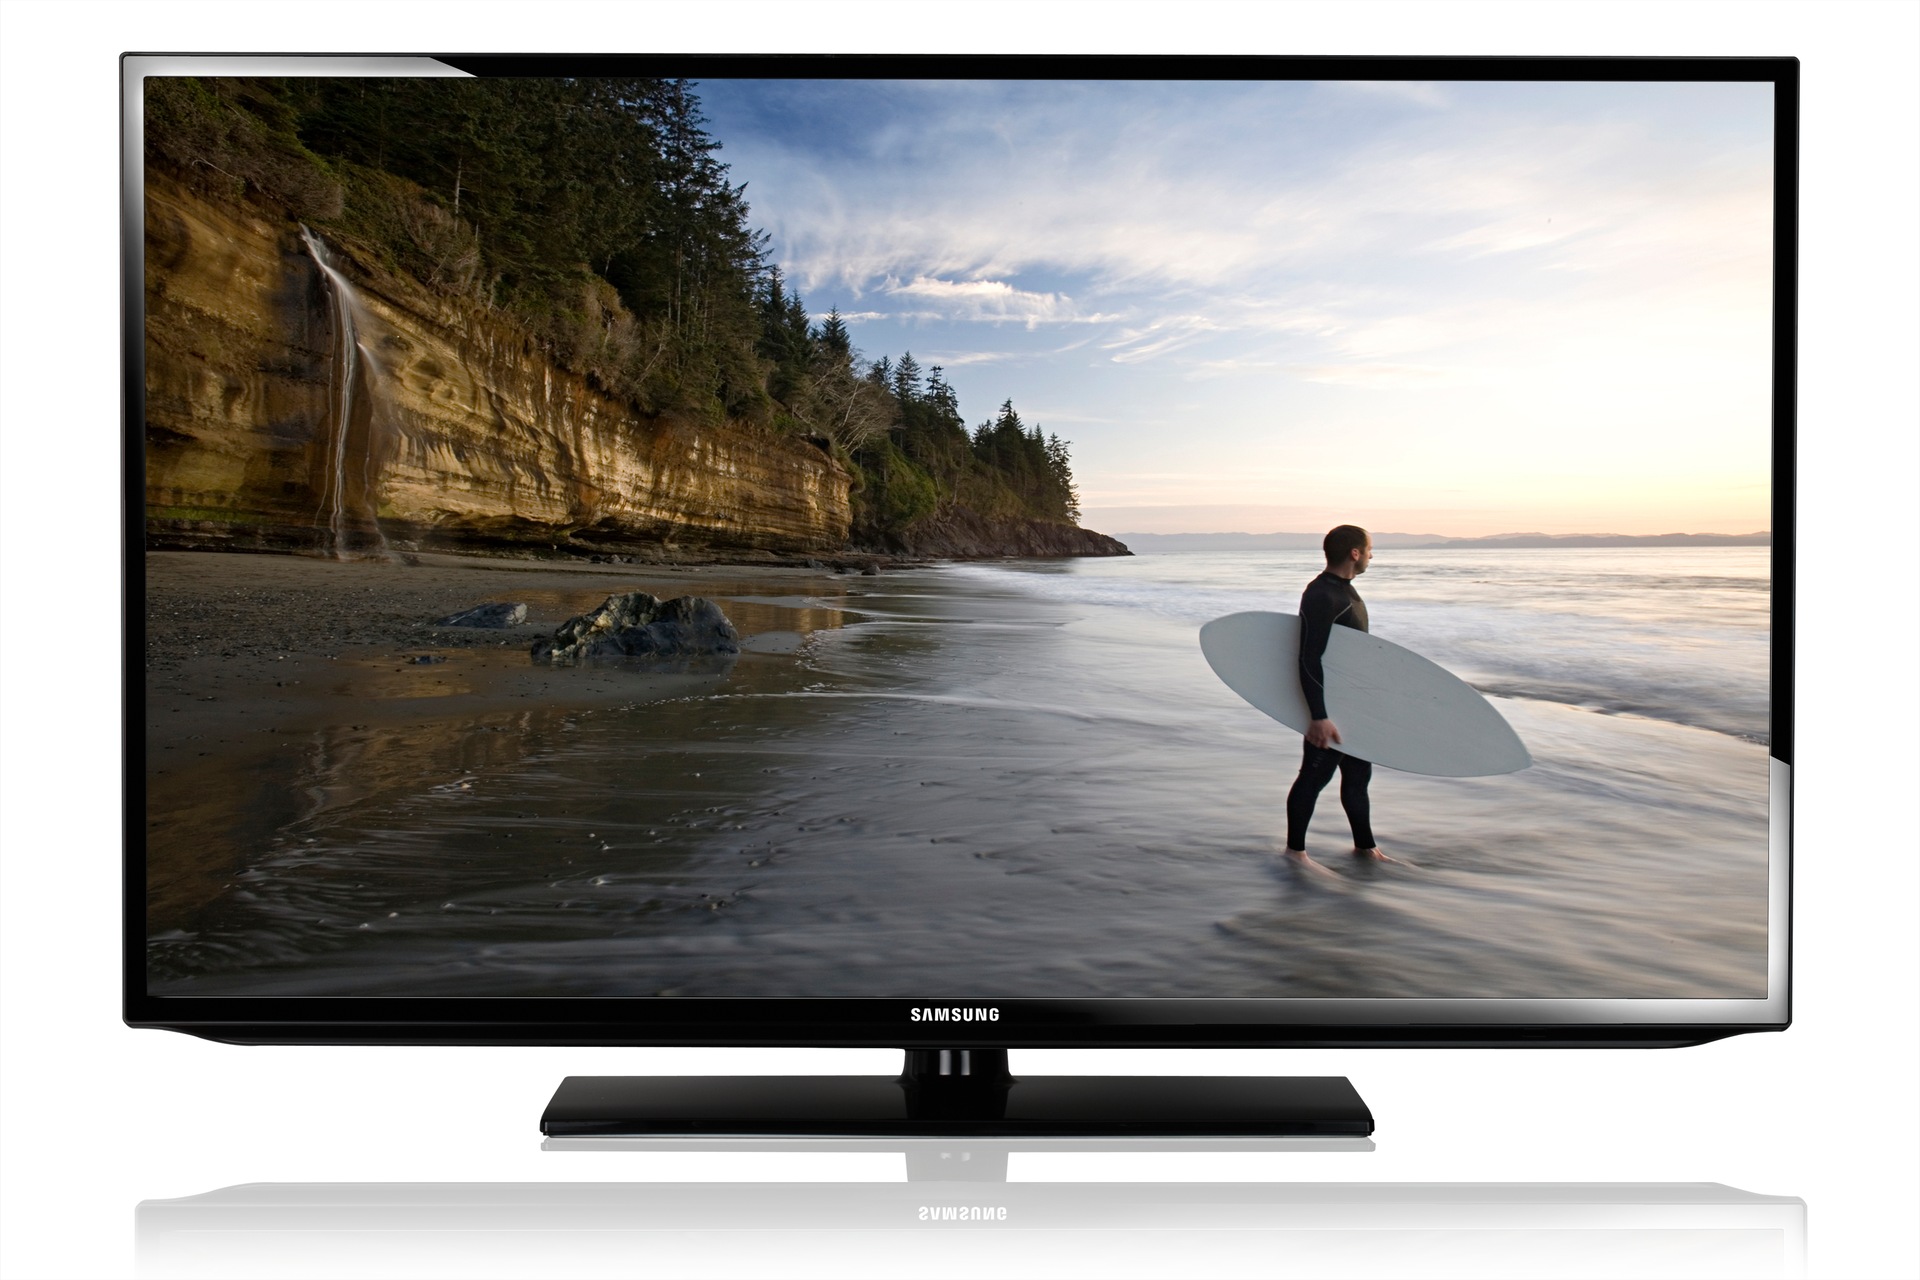 Samsung Smart Tv Ue32es5500 Manual